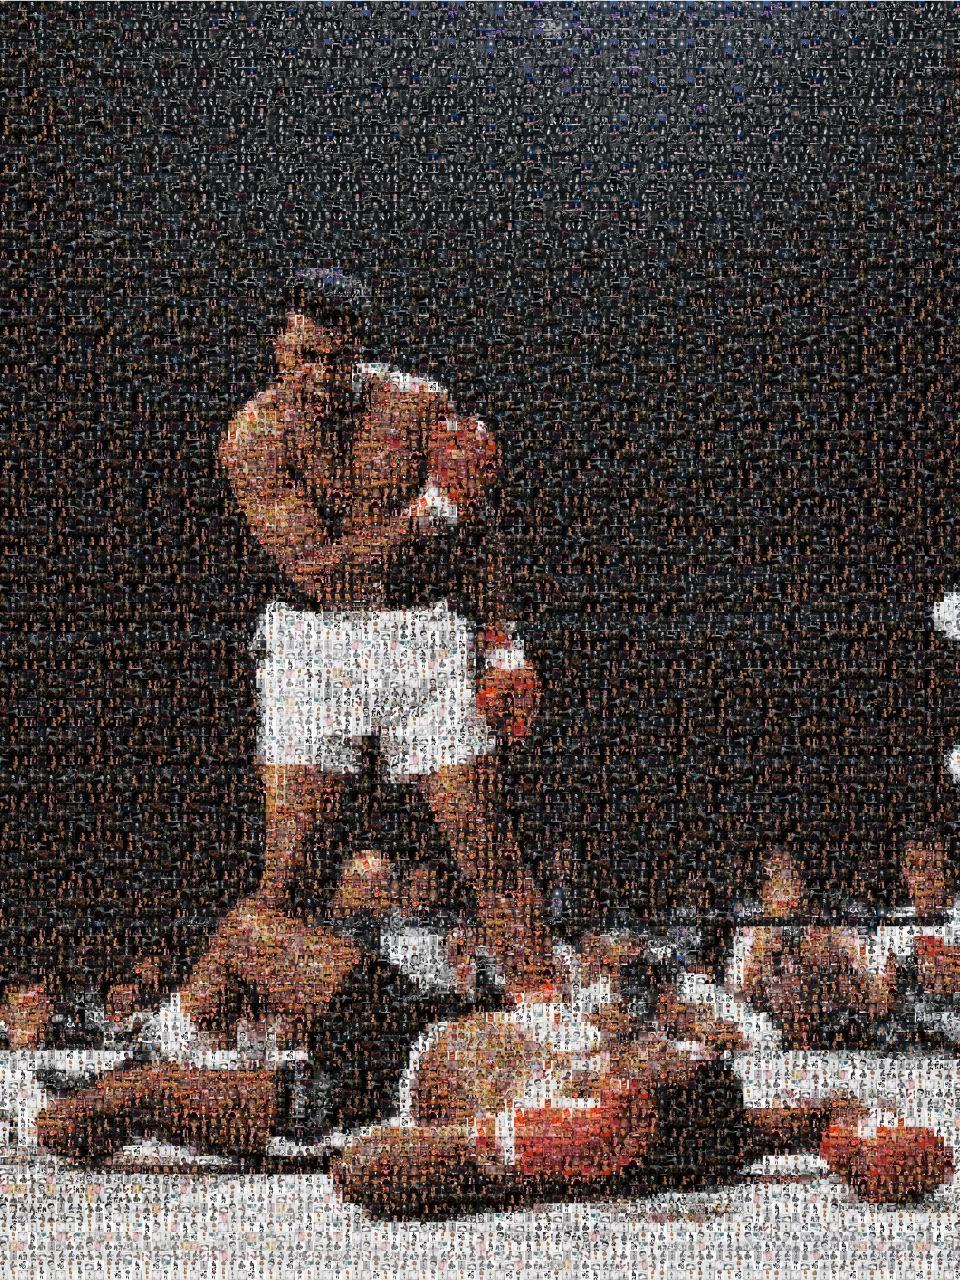 Destro Black and White Photograph - "Ali" Muhammad Ali Portrait 28x40  Boxing Photography Pop Art Photograph